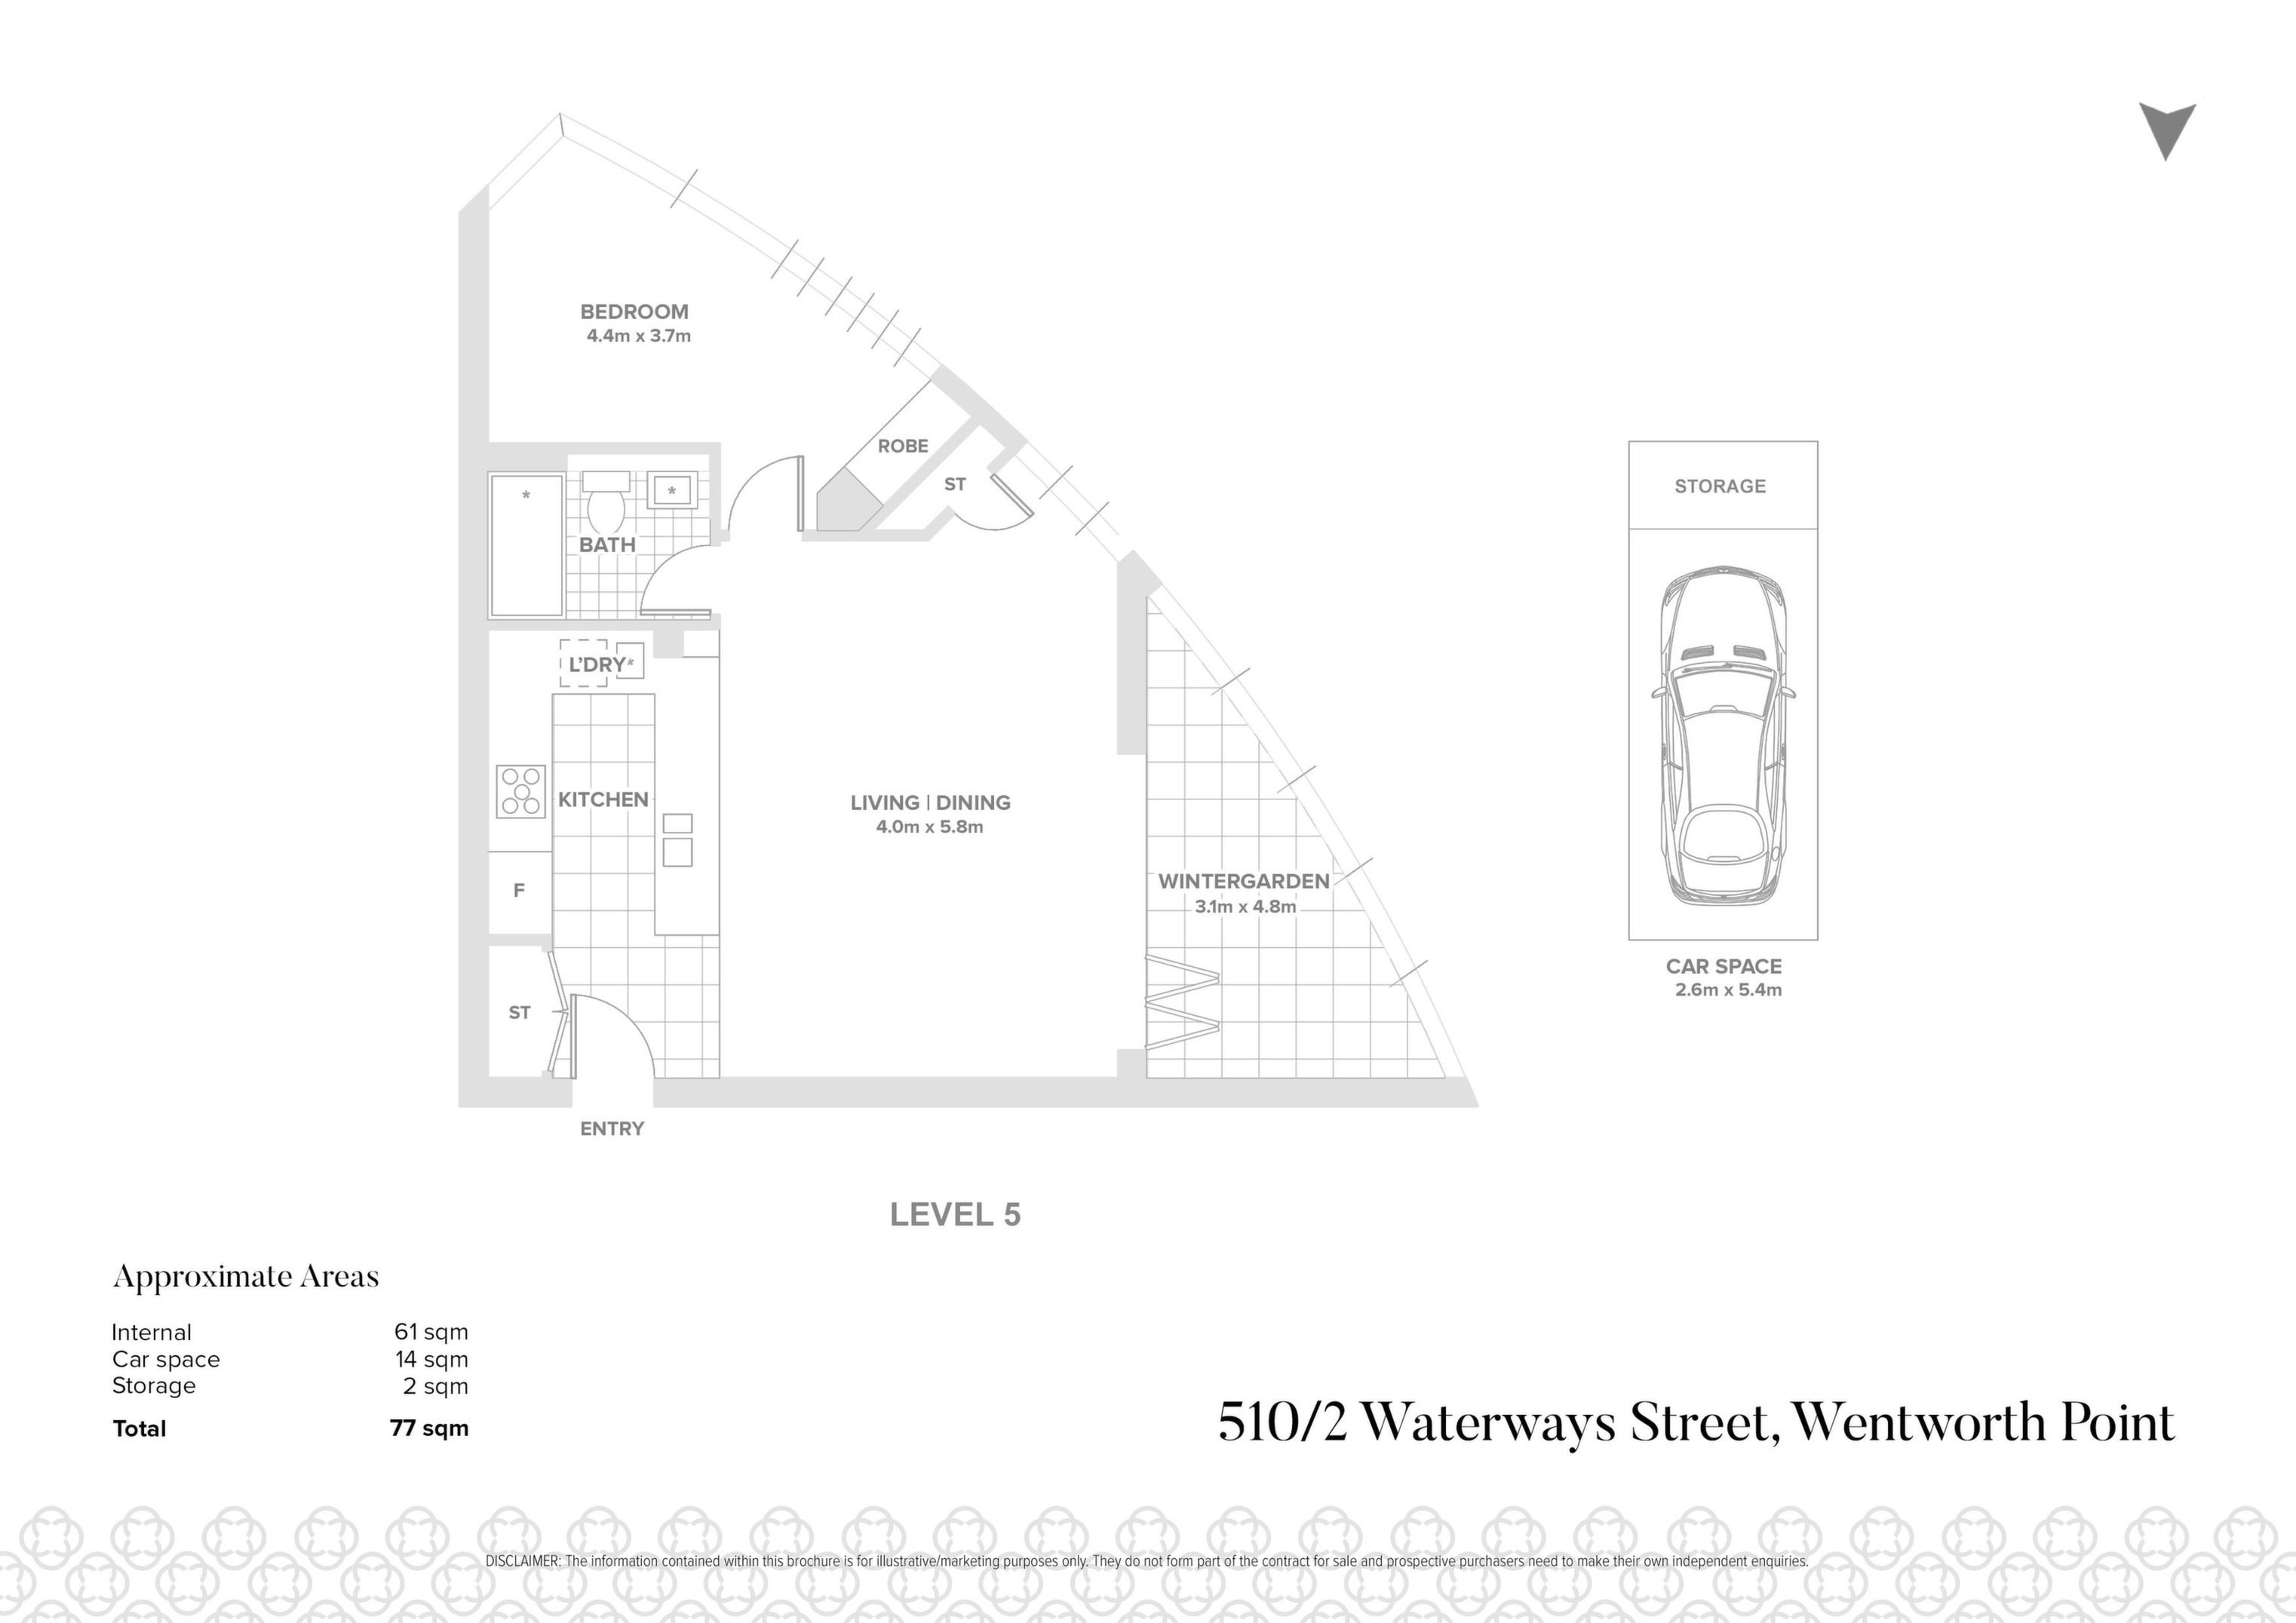 510/2 Waterways St, Wentworth Point Sold by Chidiac Realty - floorplan